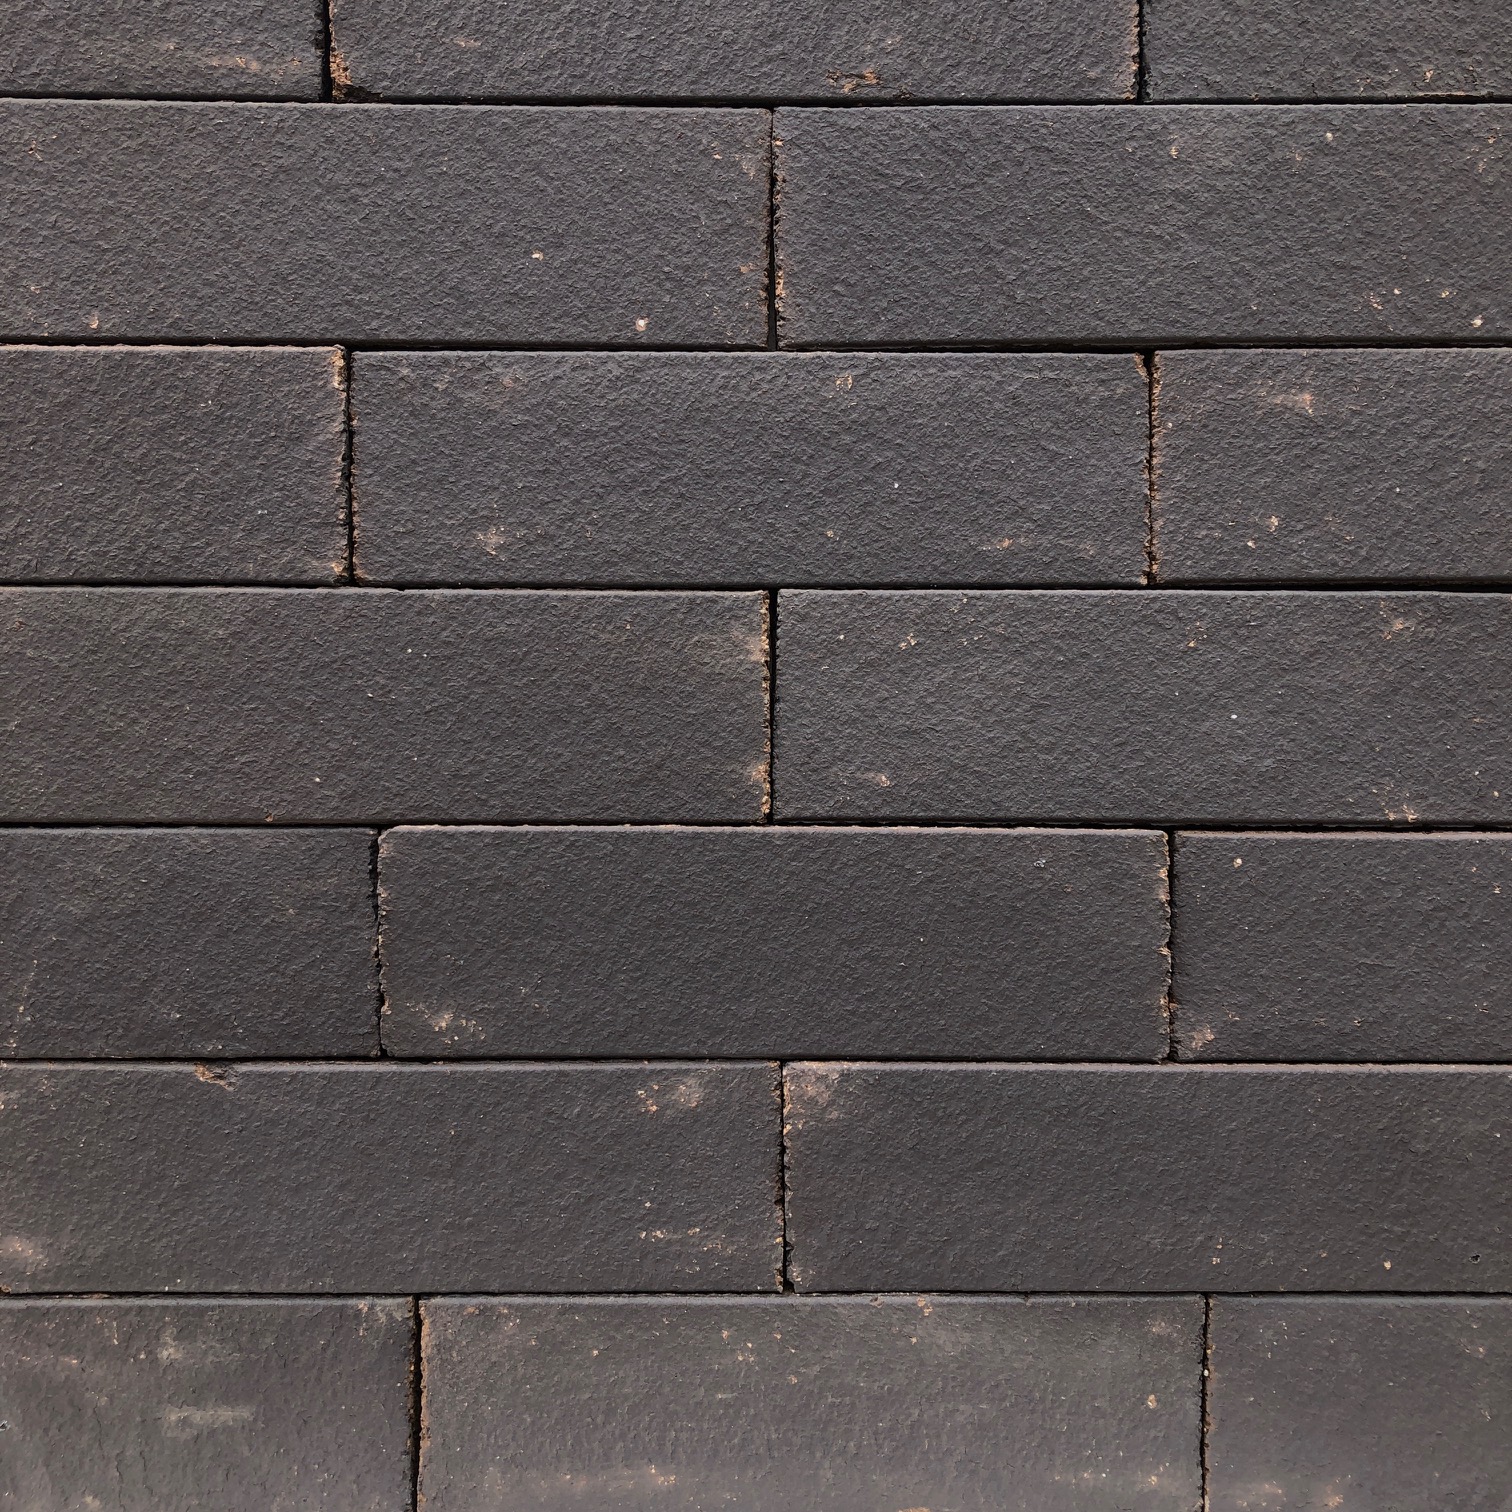 Disapproved swap initial Cheap Brick Slips Kent UK | Heritage Stone Slips | The Brick Slip Co